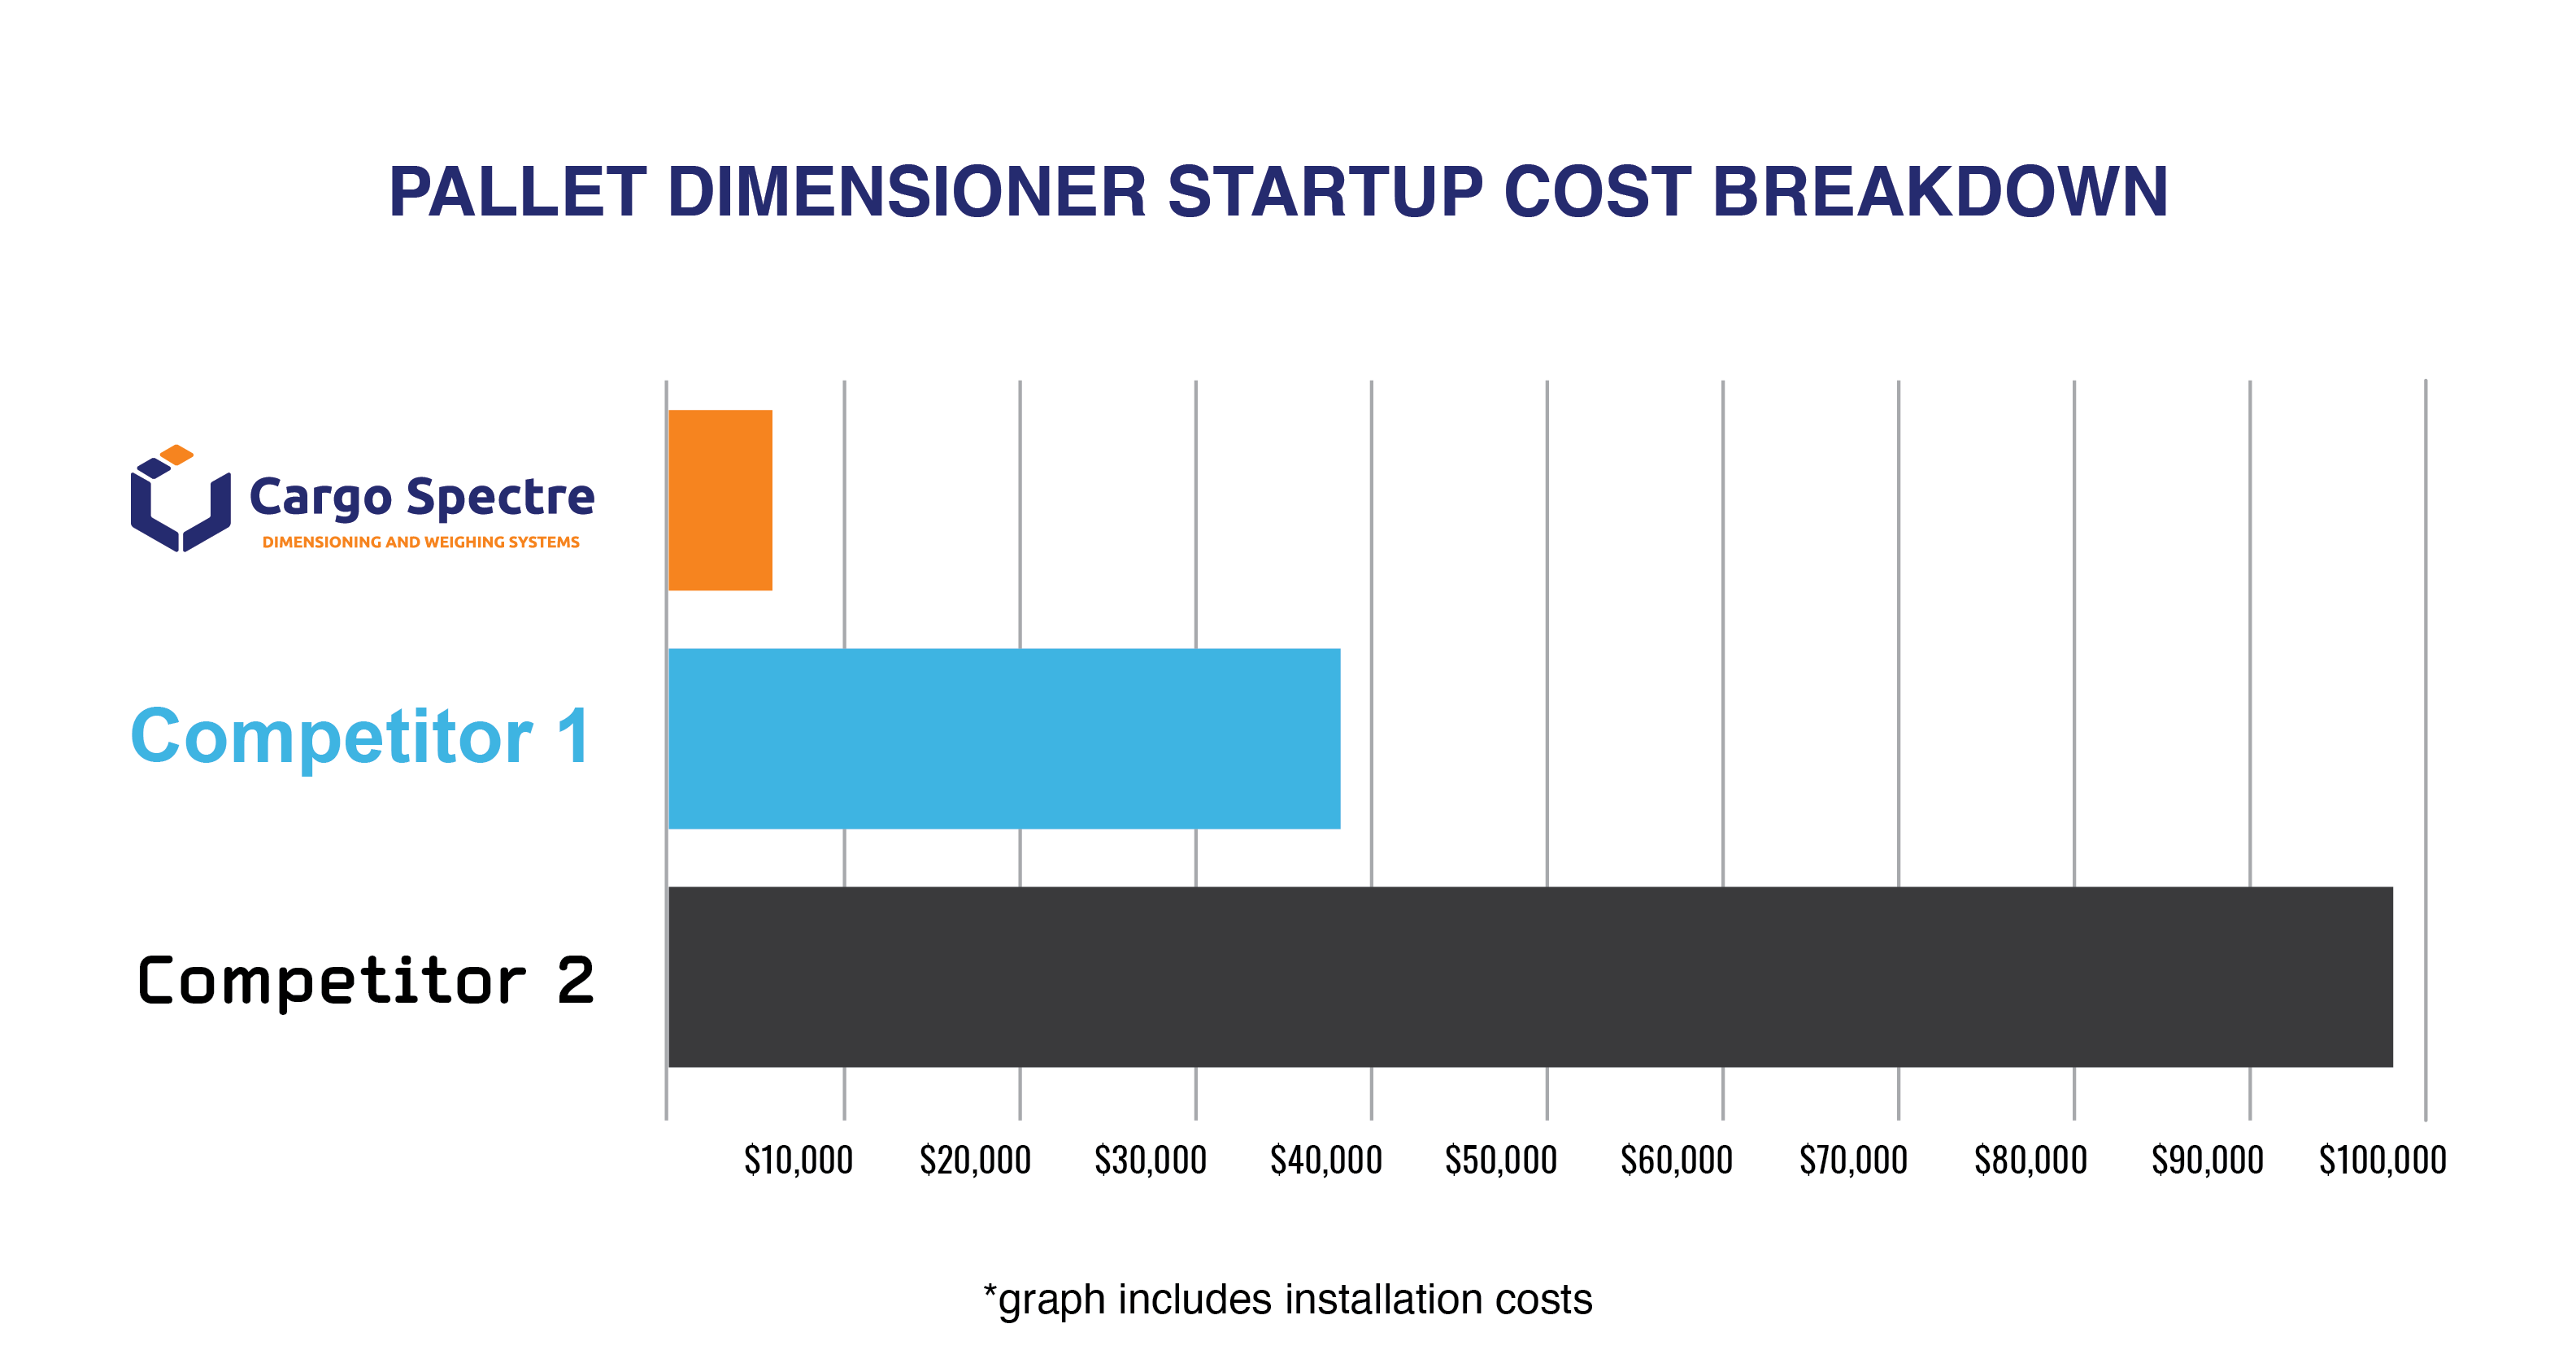 Dimensioner startup costs